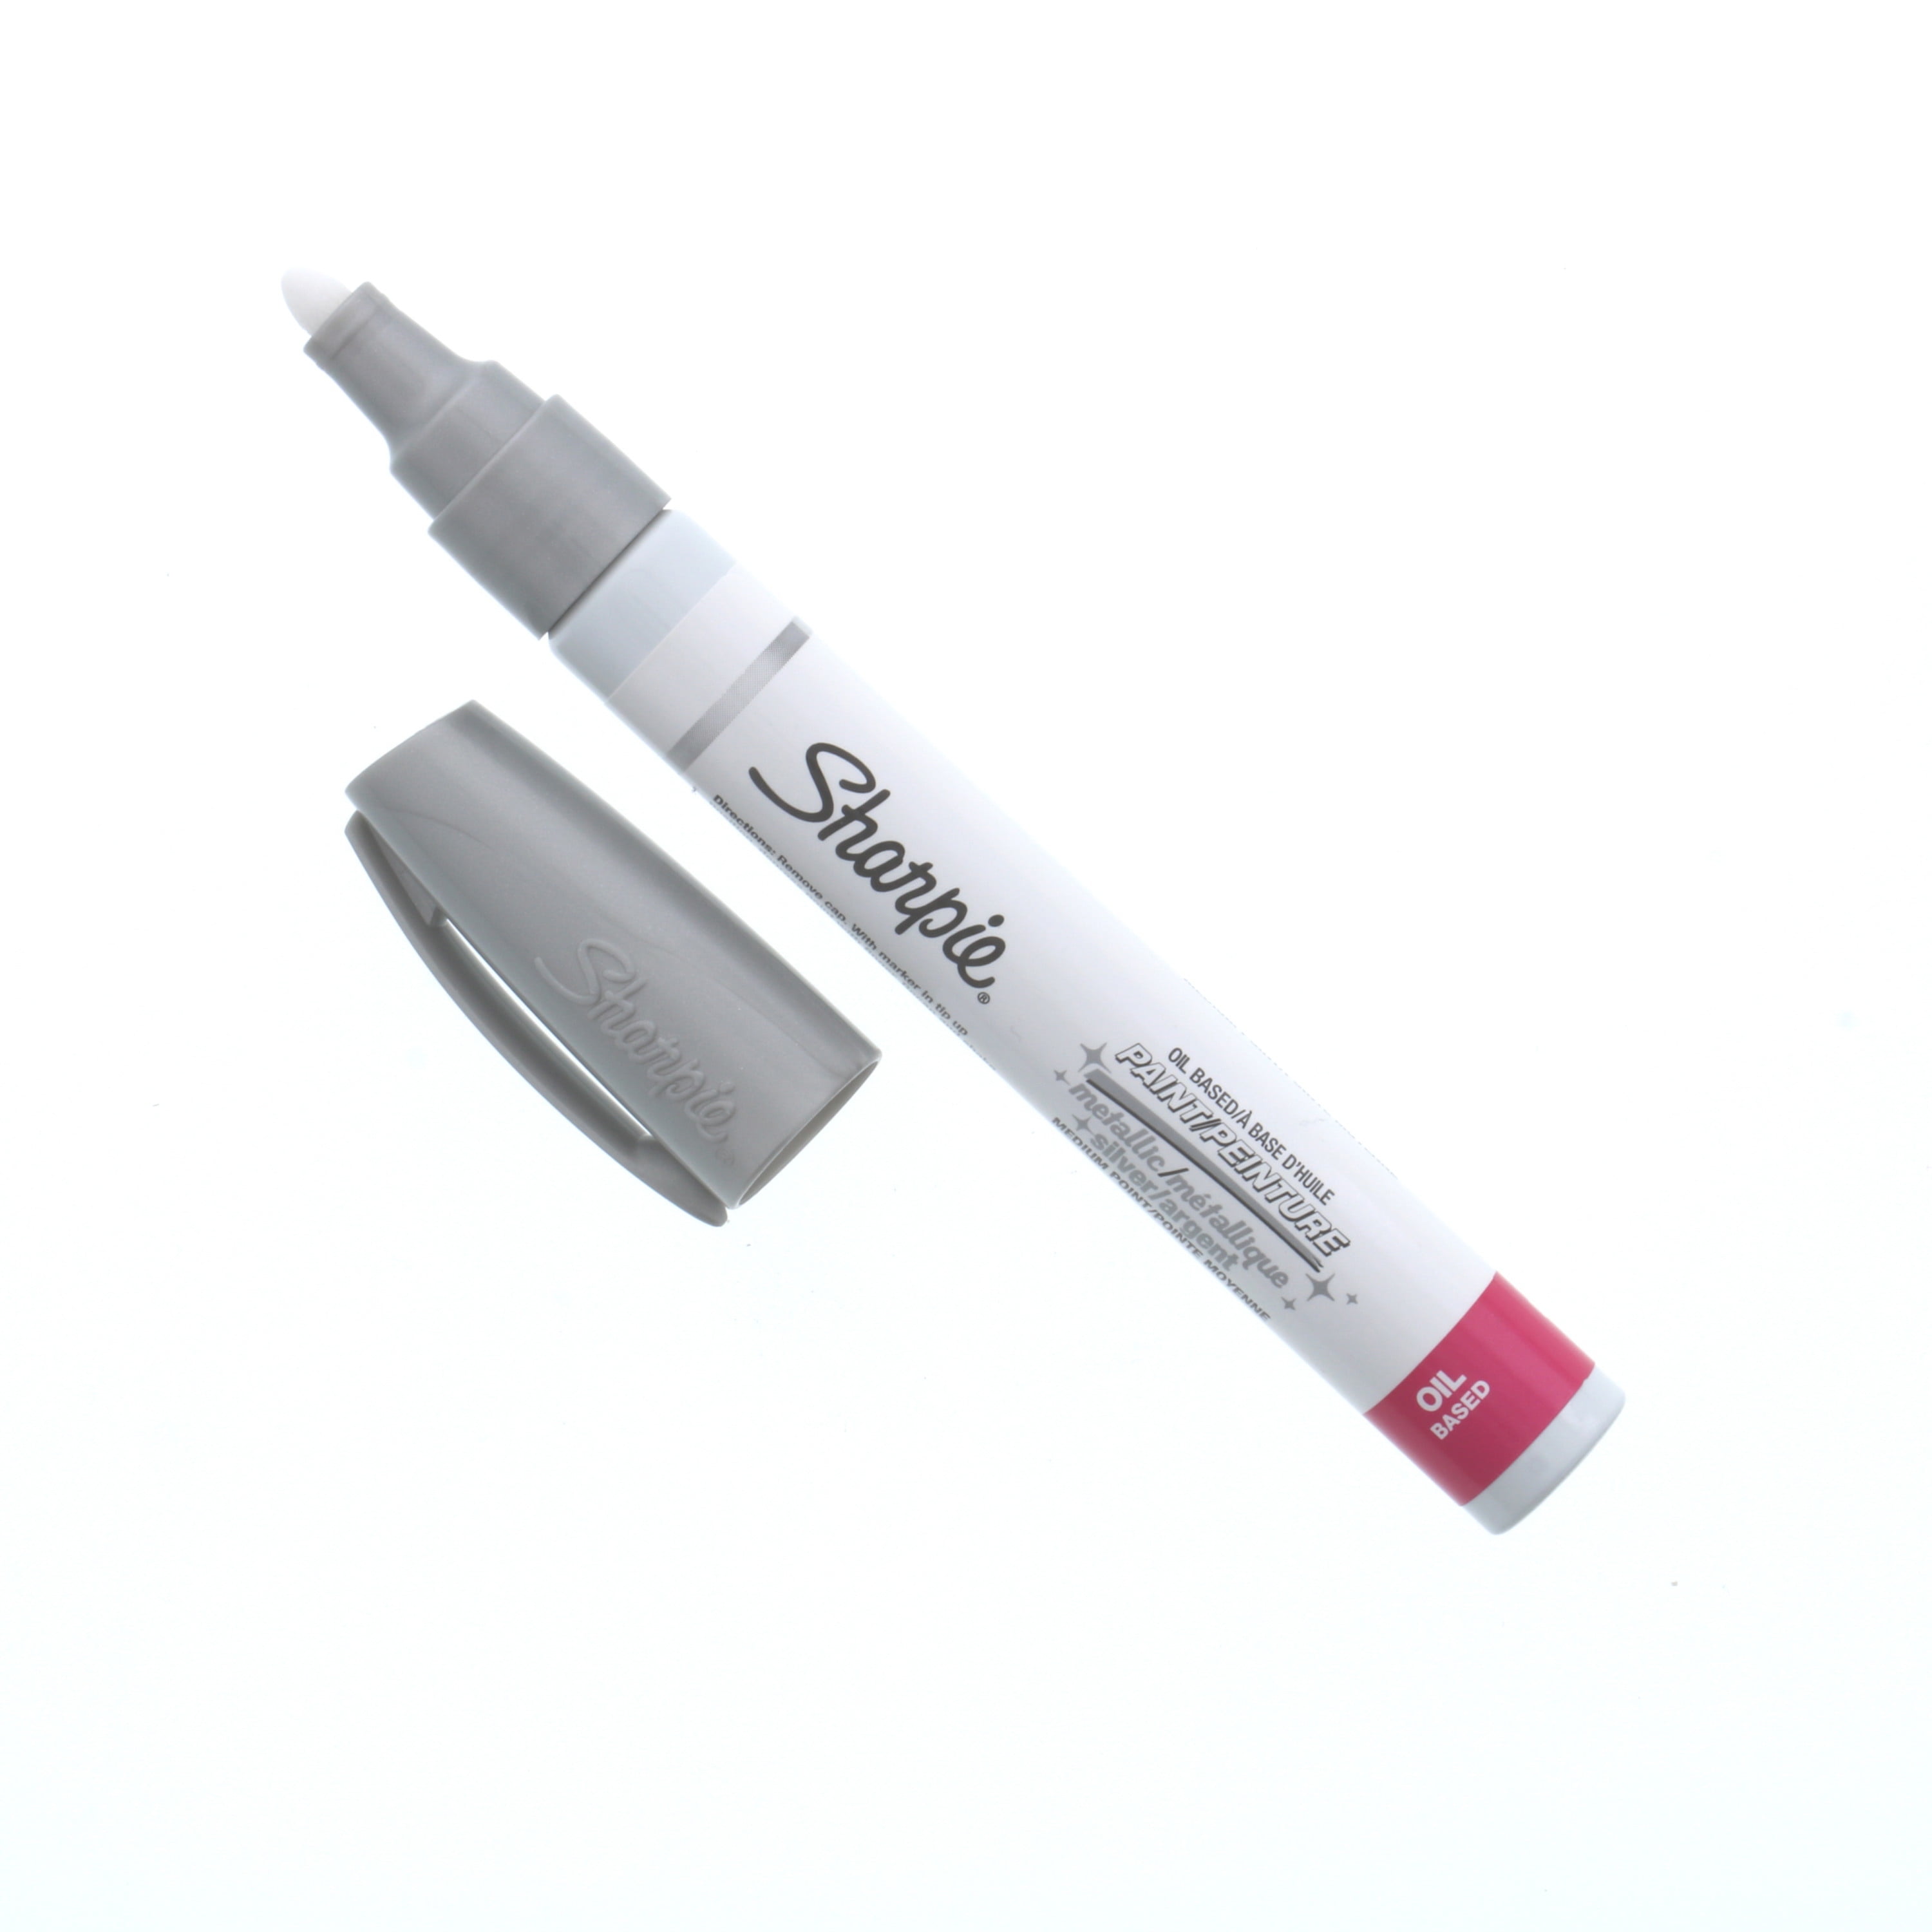 Sharpie Metallic Paint Marker - Medium Marker Point Type - Metallic Silver  Ink - White Barrel - 1 Each